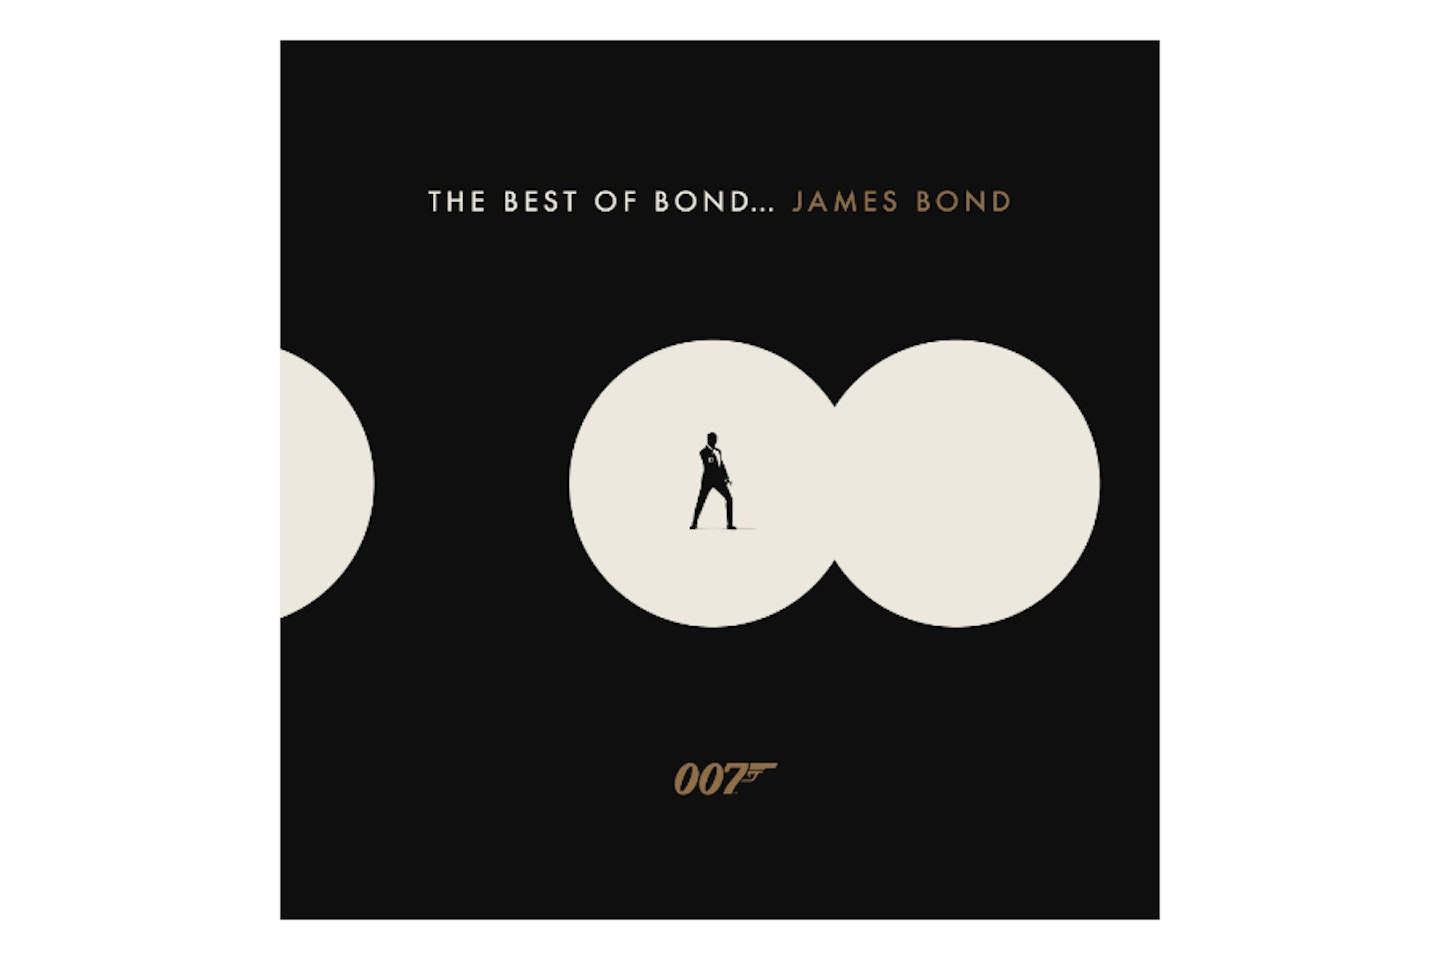 The Best Of Bondu2026 James Bond